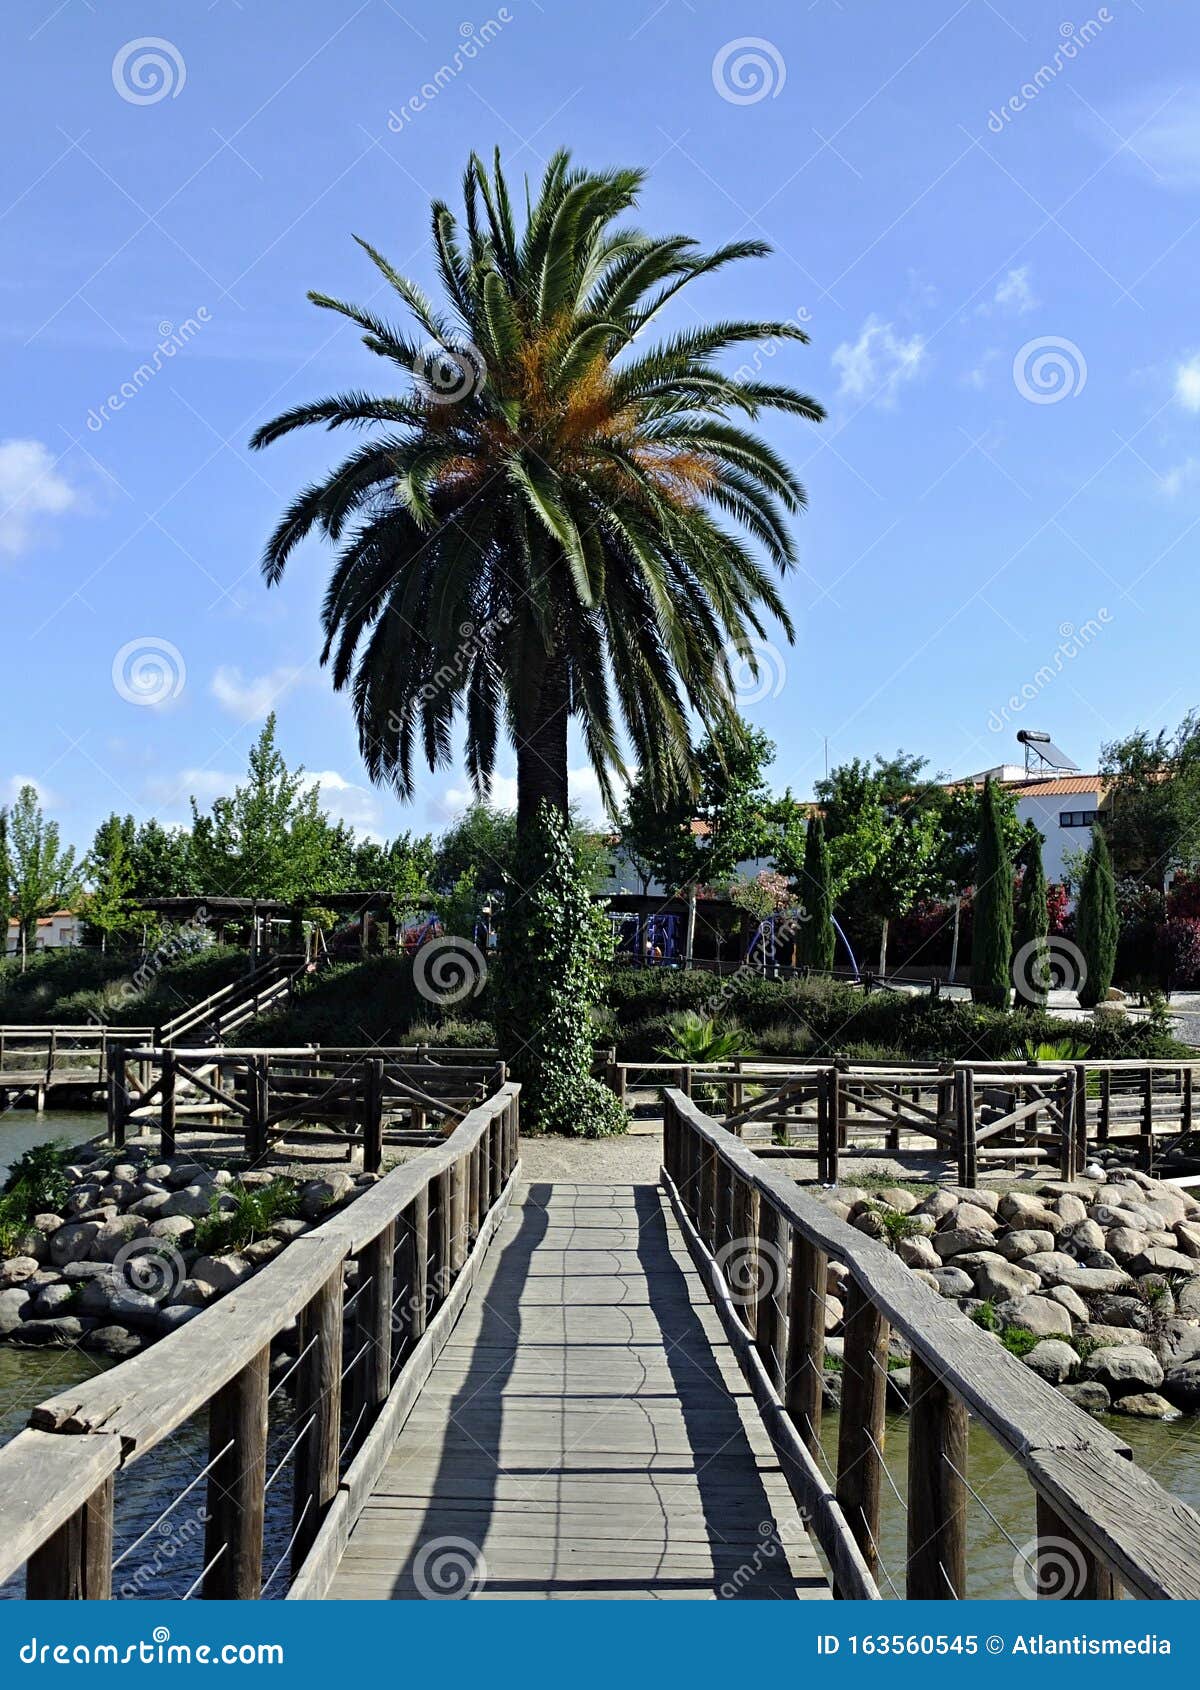 palmtree and wooden path at the la coronada fishing pond